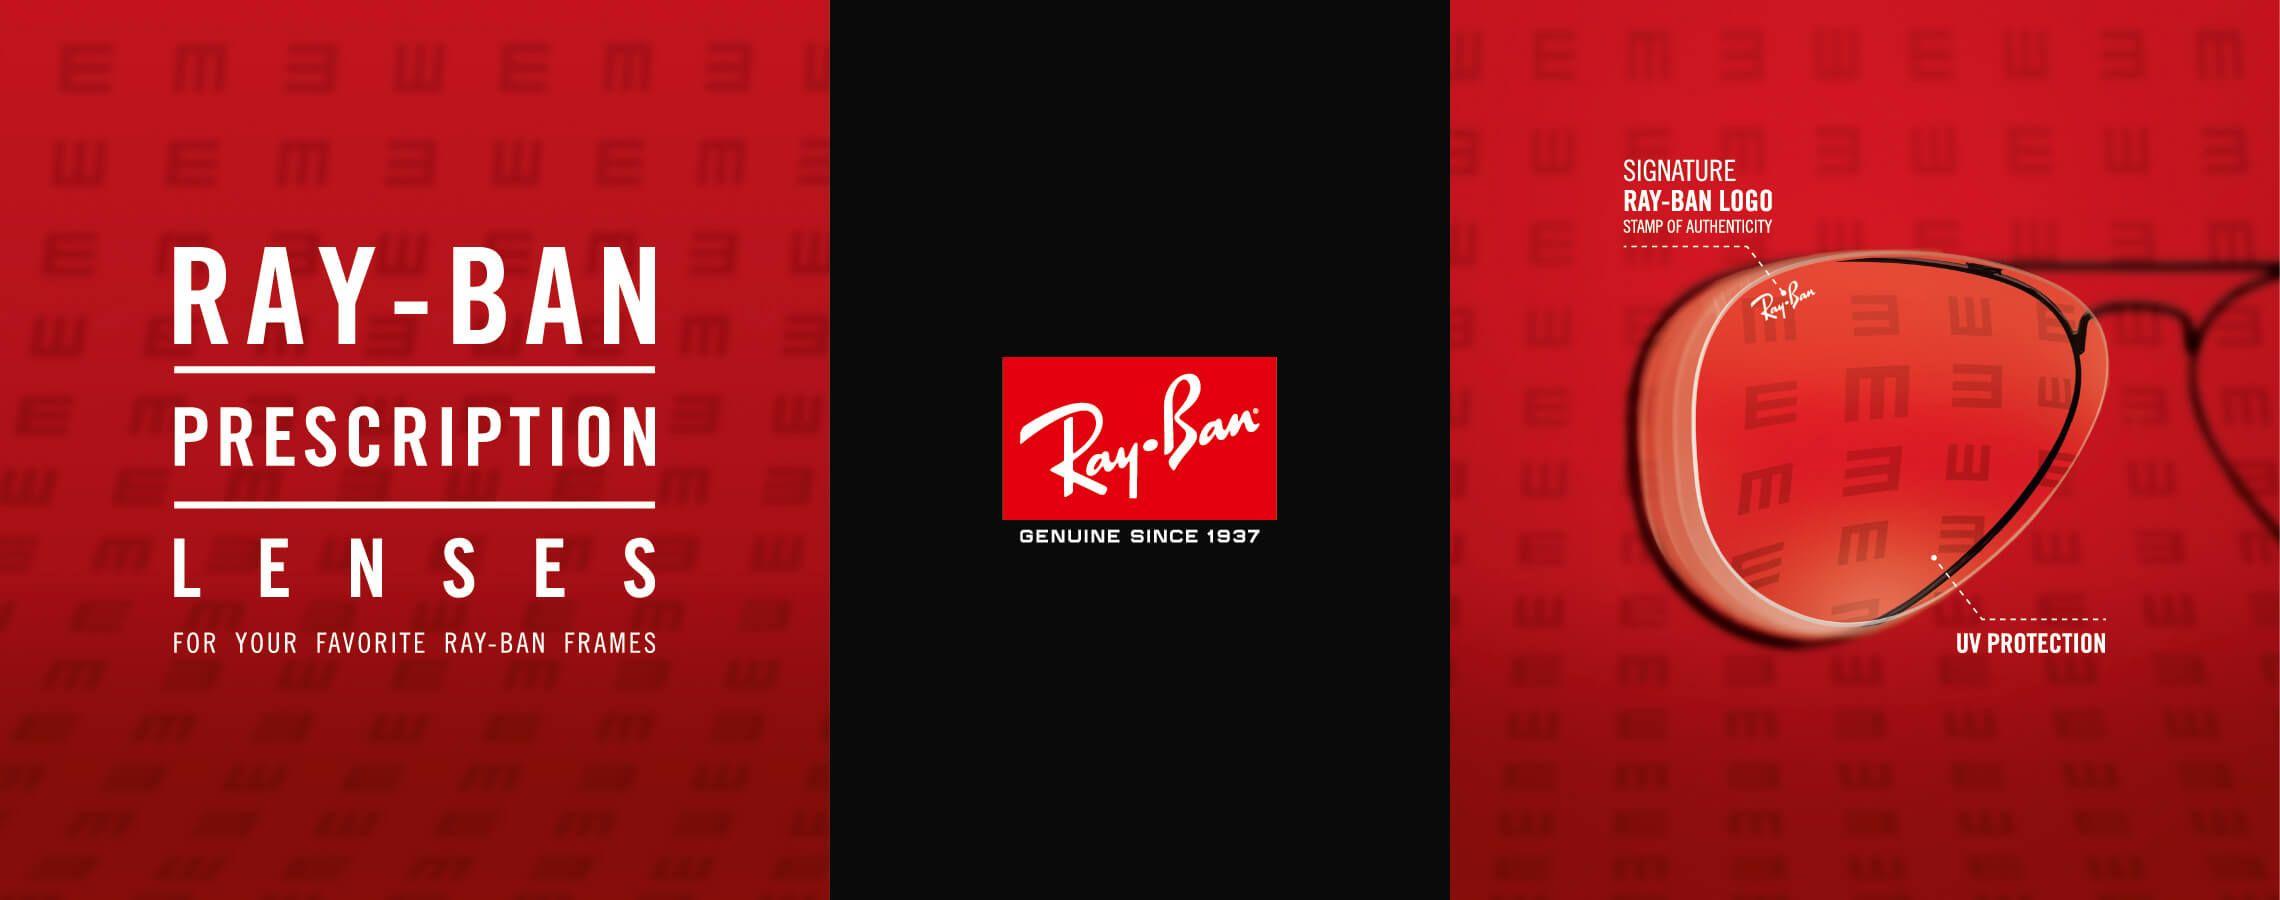 Ray-Ban Logo - New Ray Ban Prescription Lenses Now Available